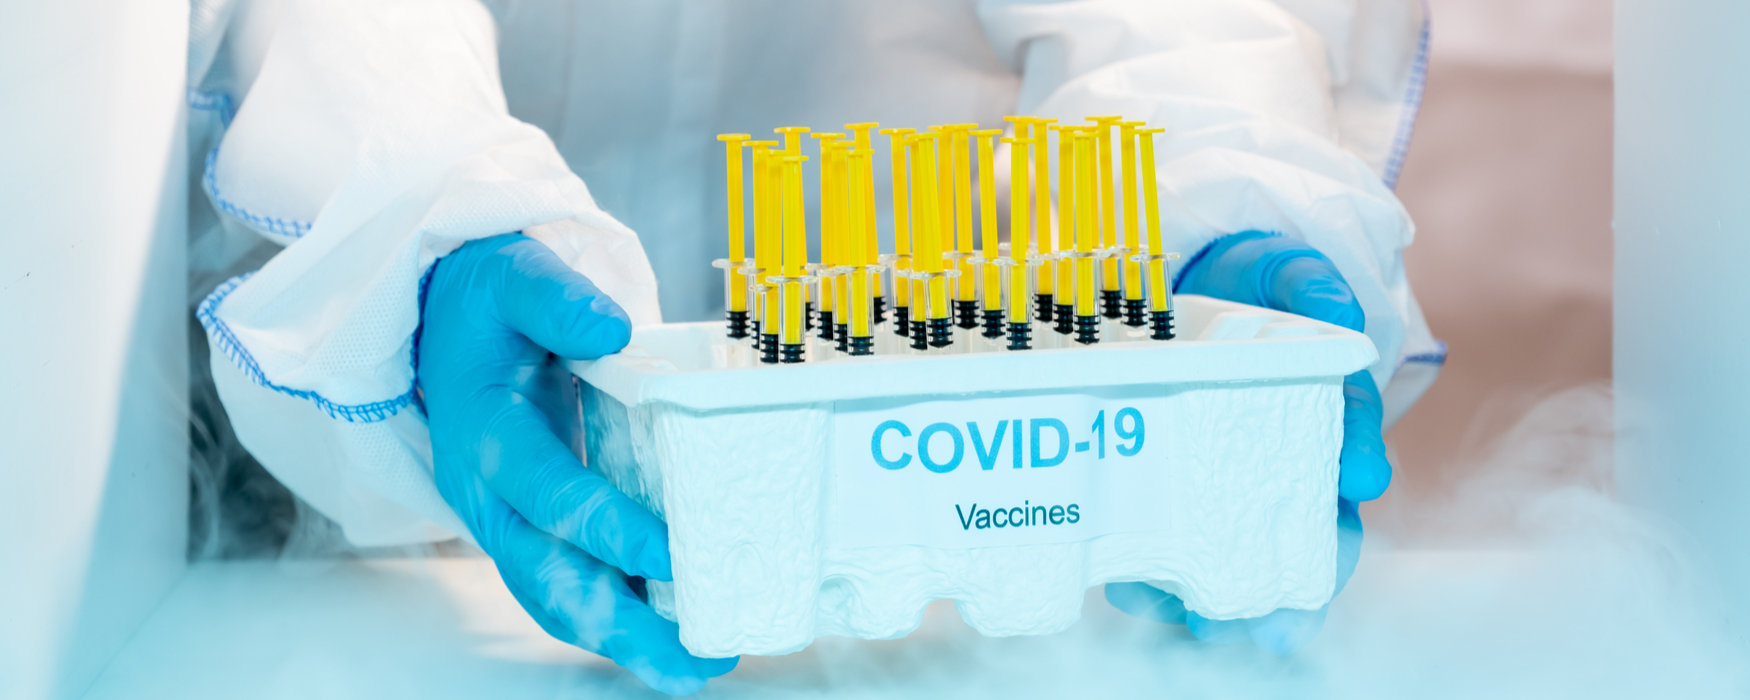 Virginia covid vaccine freezers - covid 19 vaccine freezer - vaccine storage in Virginia